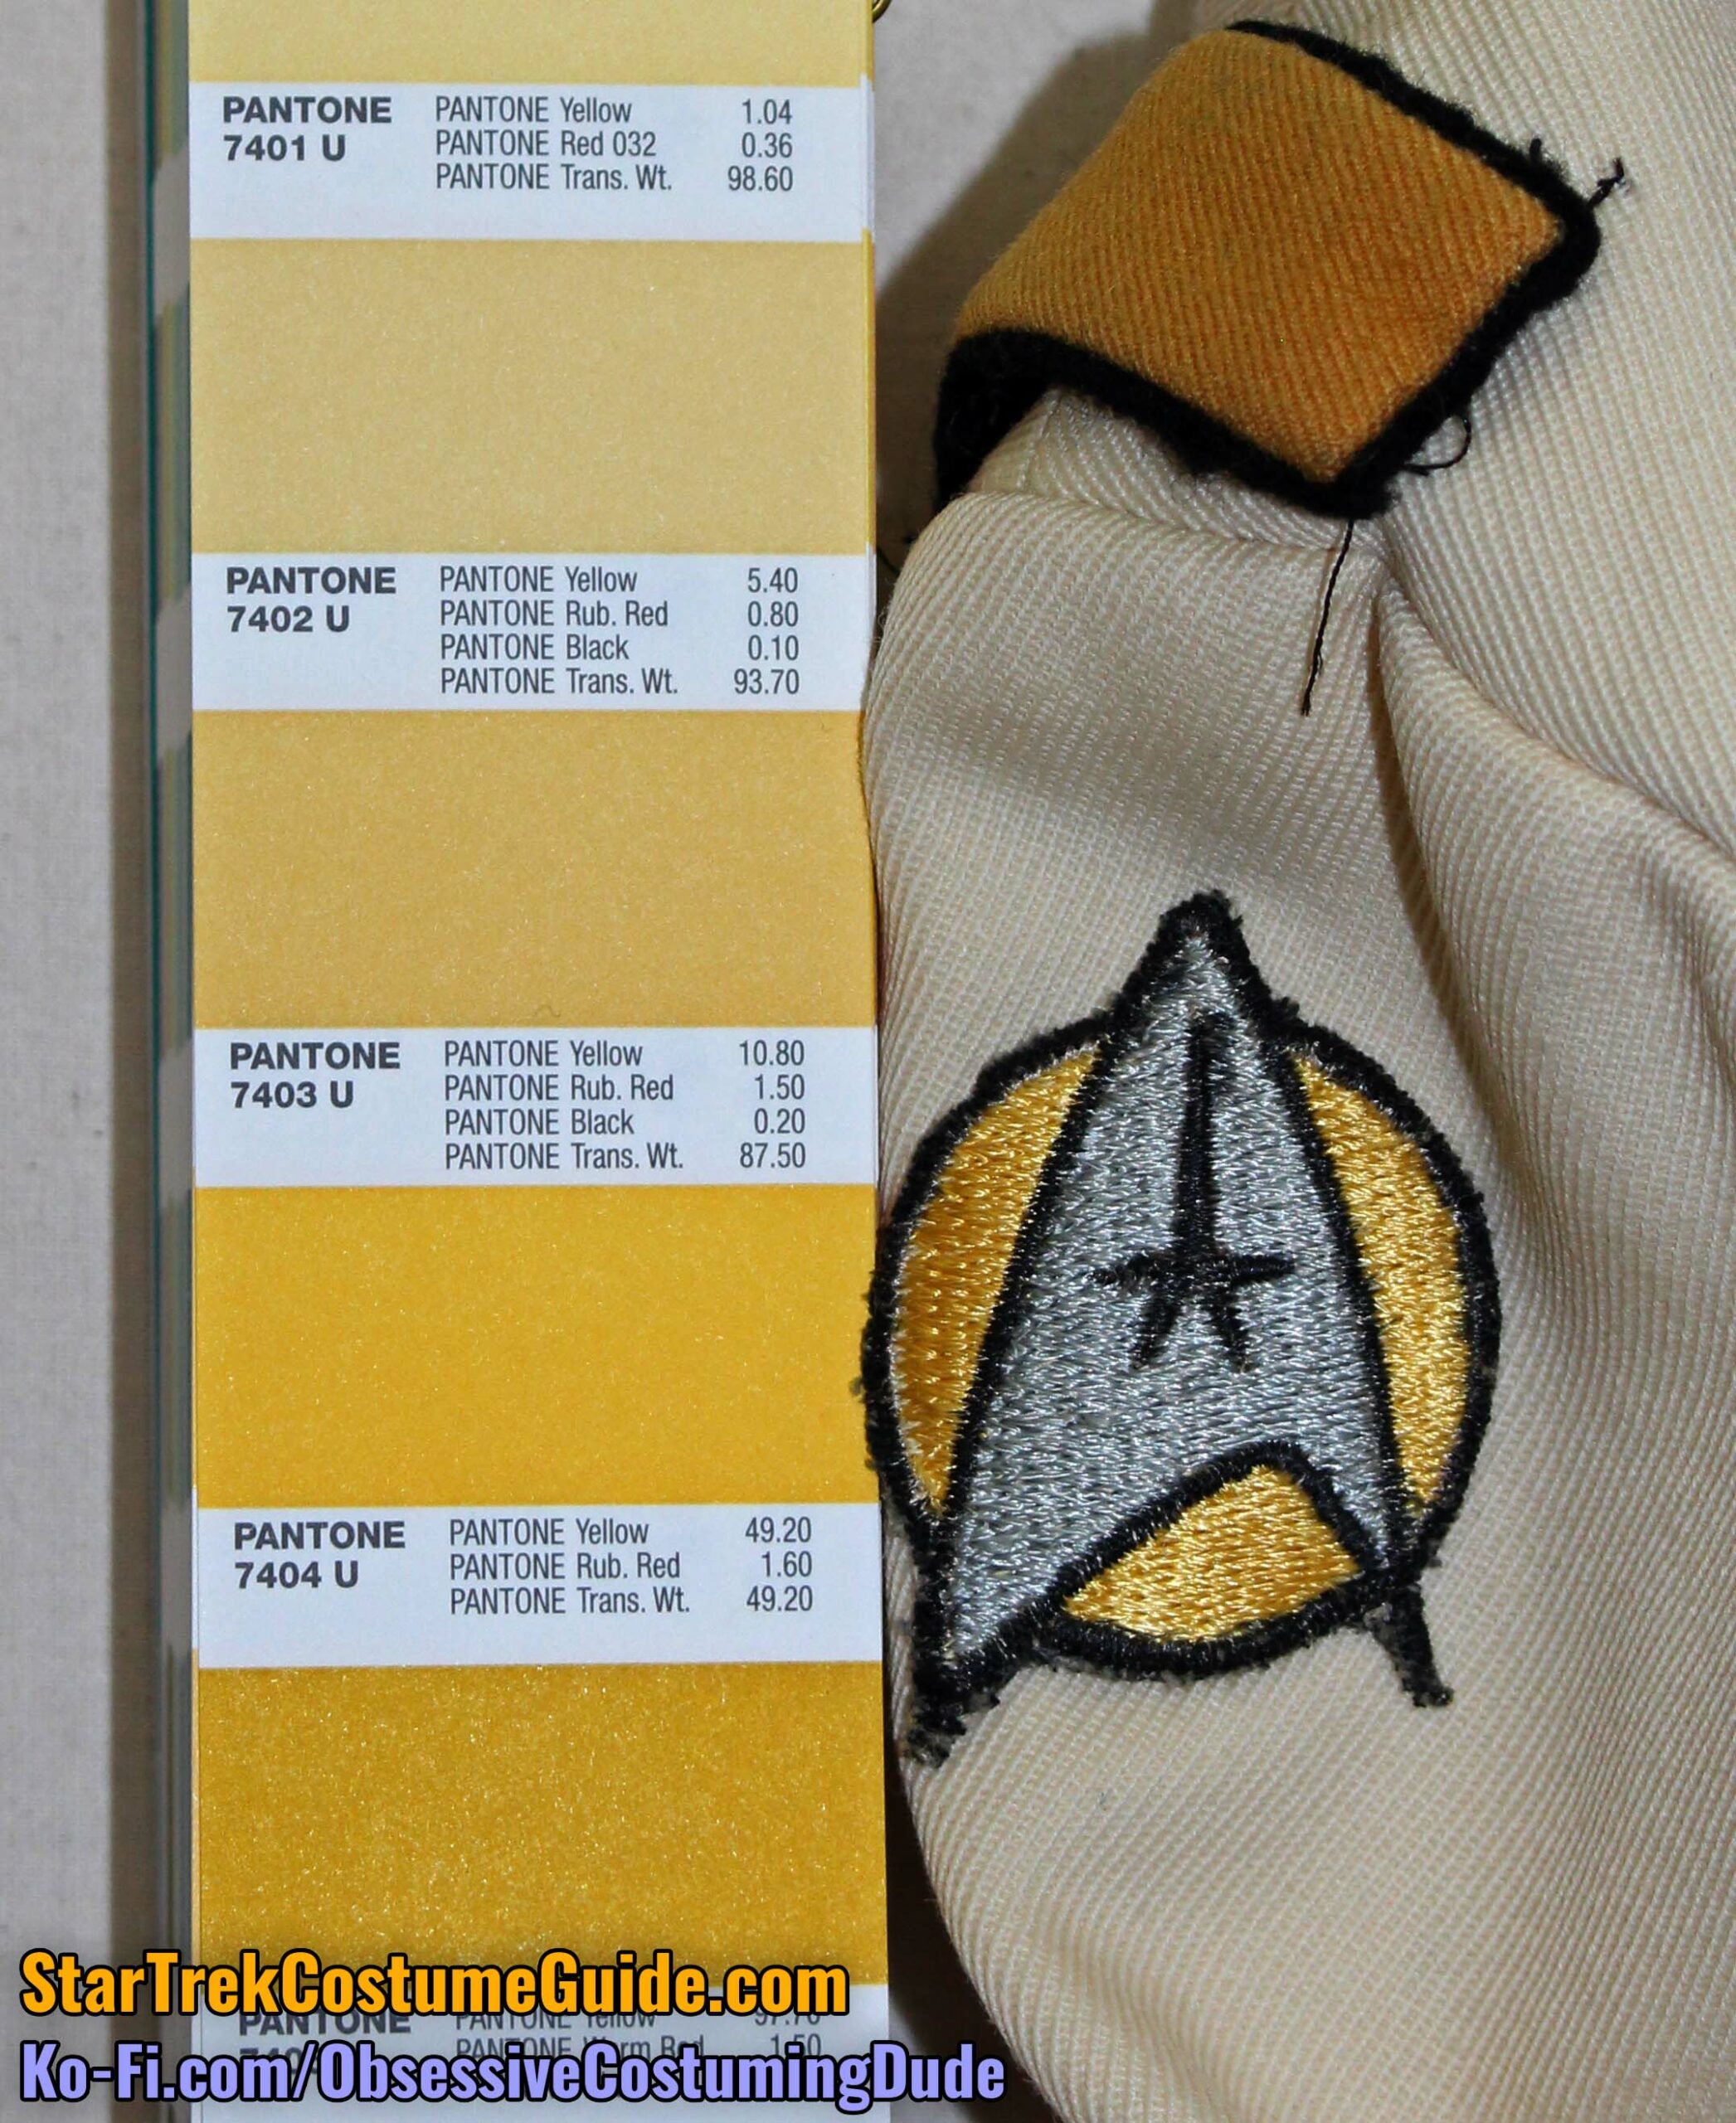 TWOK engineering radiation suit examination - Star Trek Costume Guide